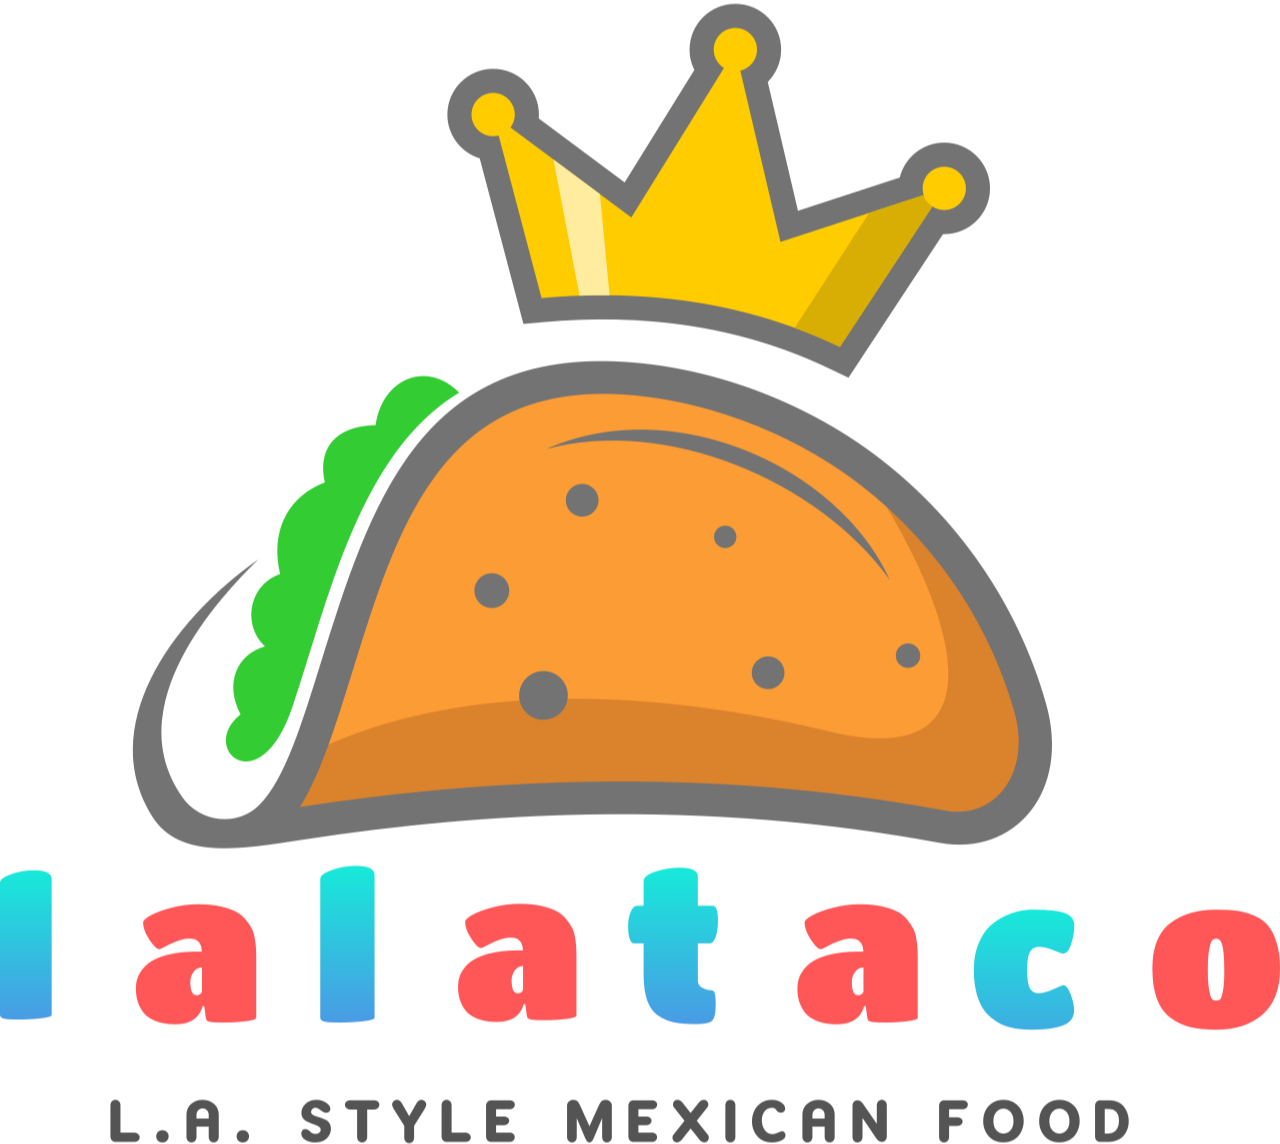 la la tacos's logo